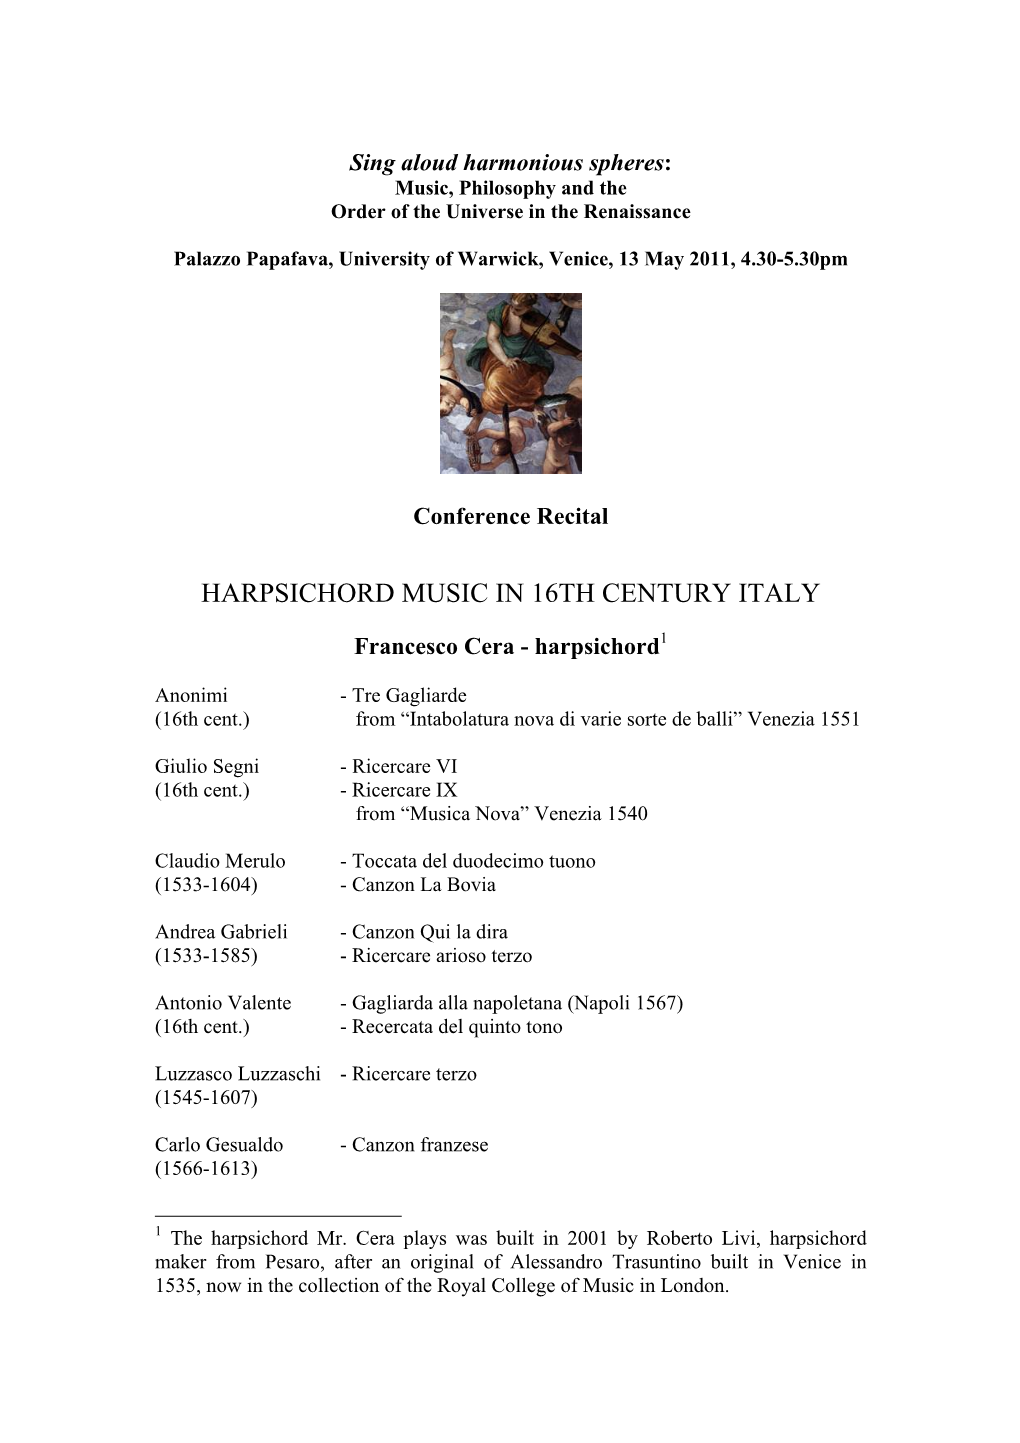 Harpsichord Music in 16Th Century Italy